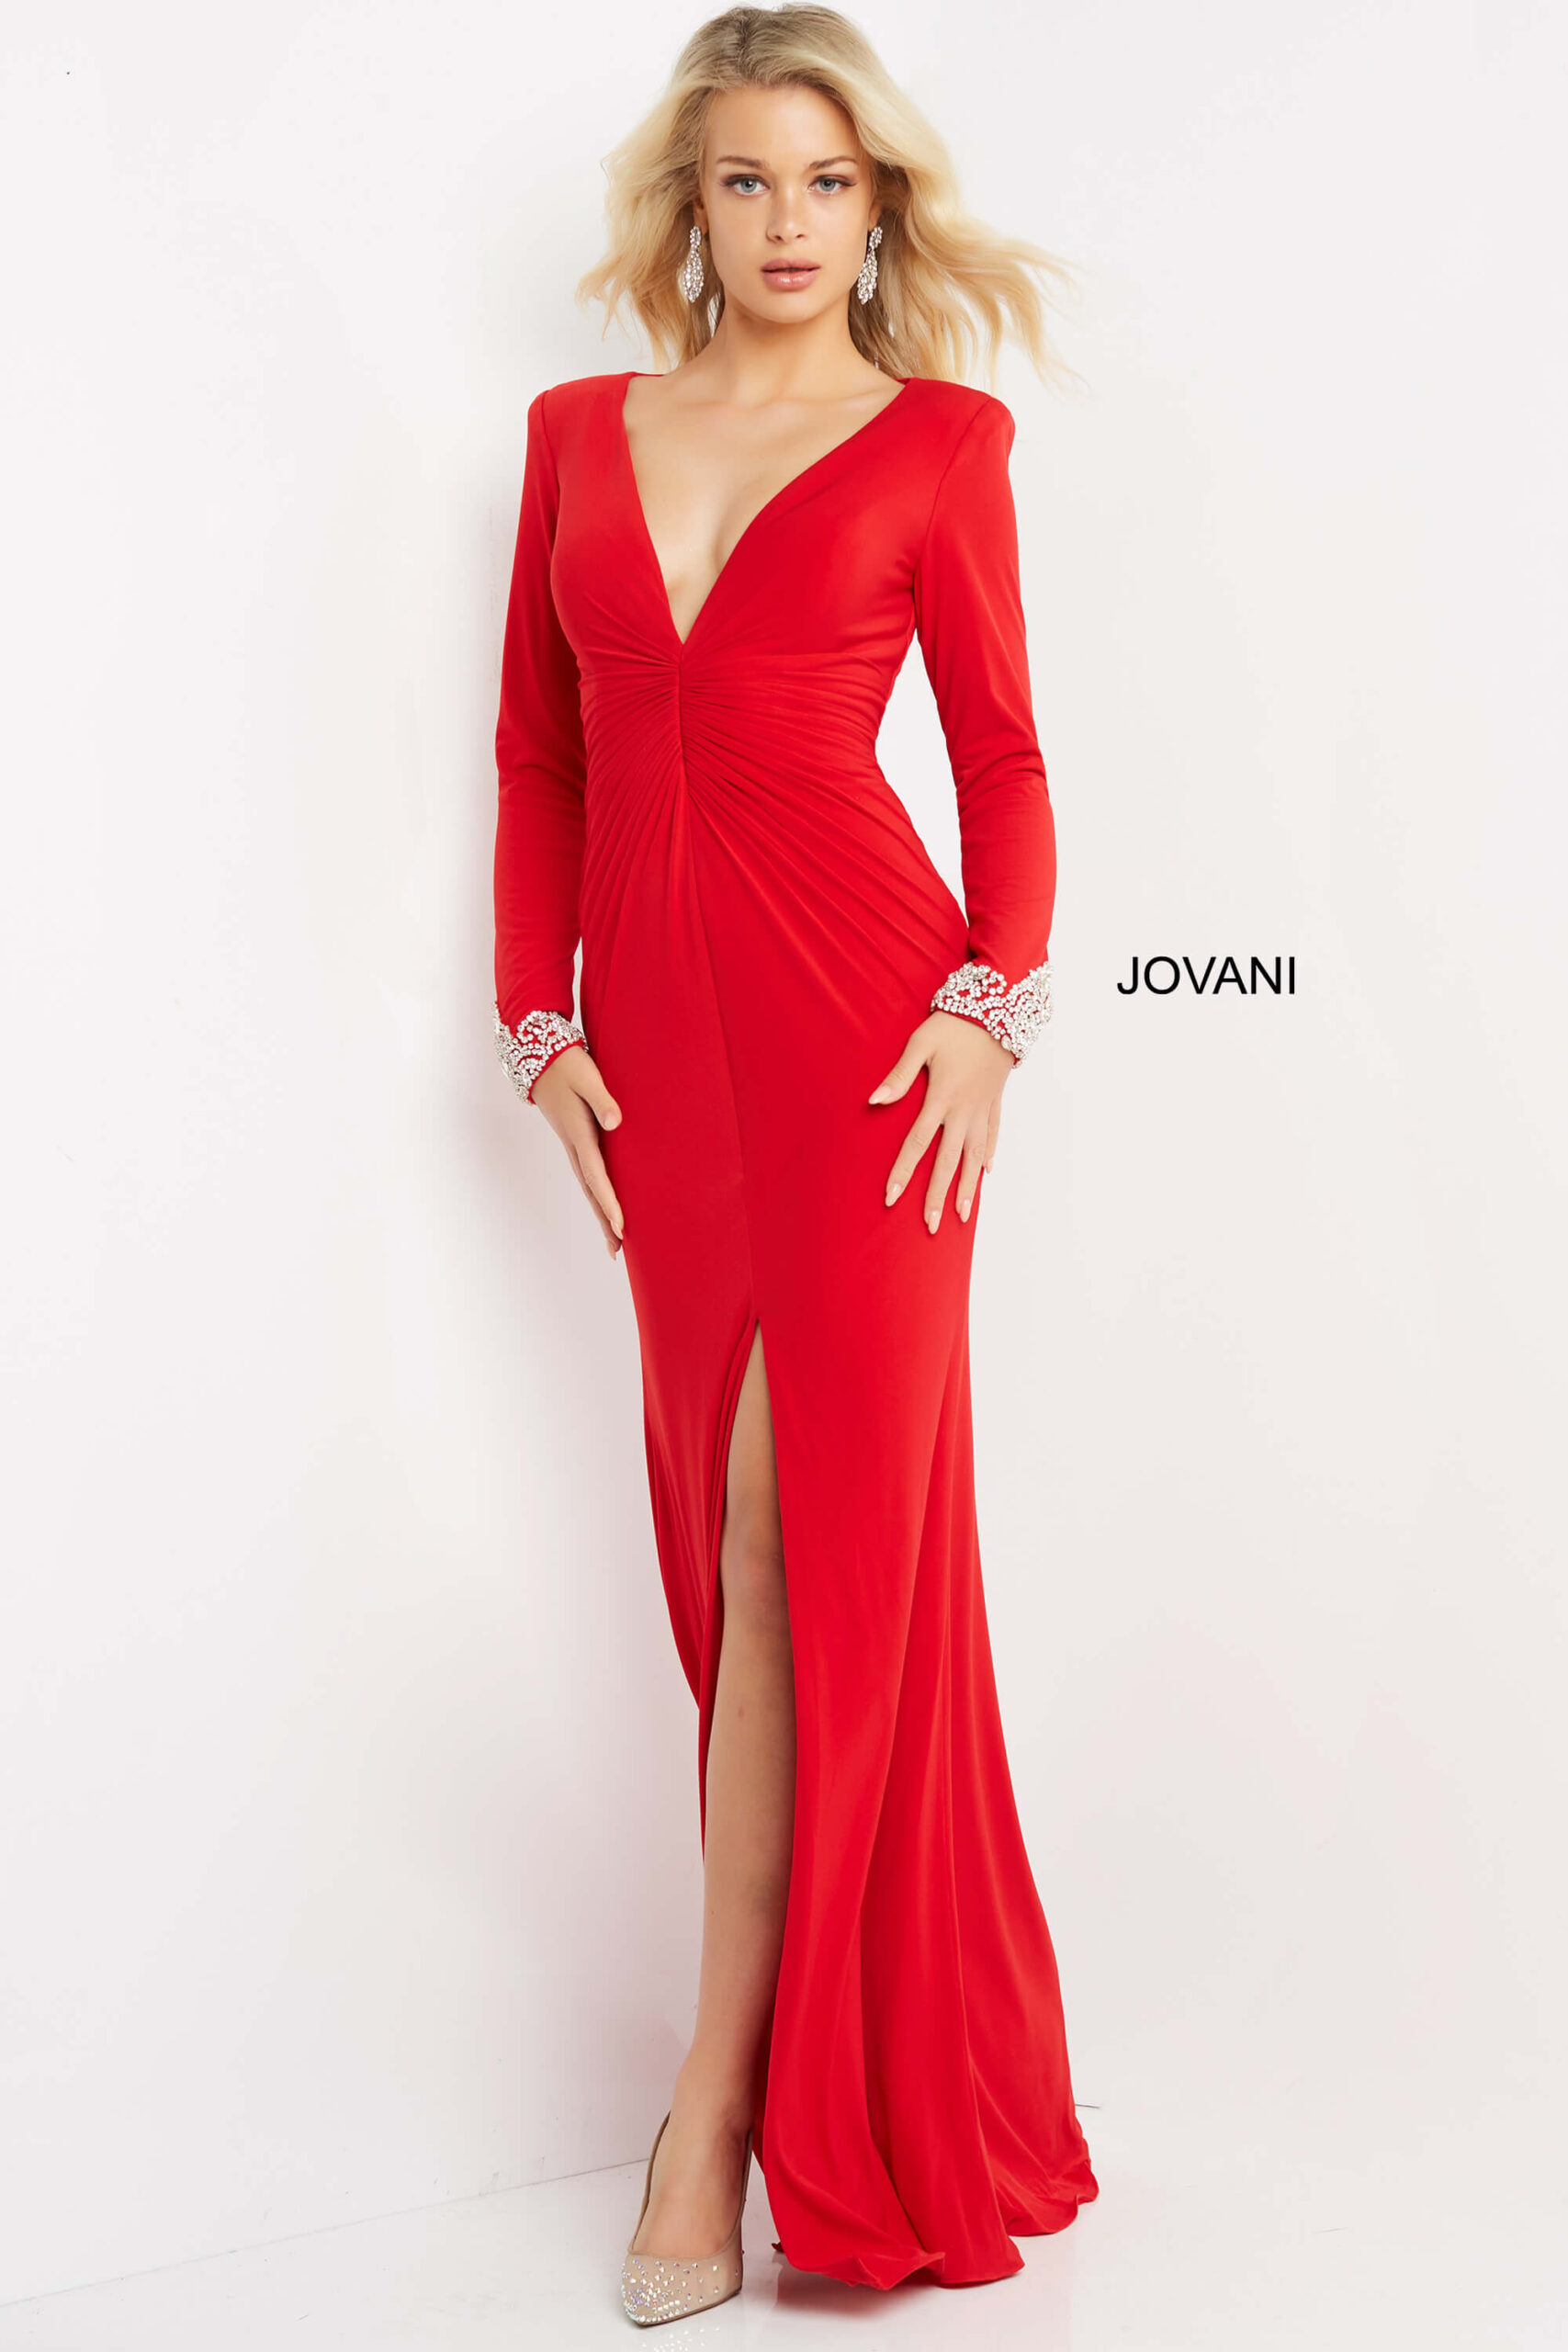 Jovani 07320 Red Long Sleeve Sheath Plus Size Dress